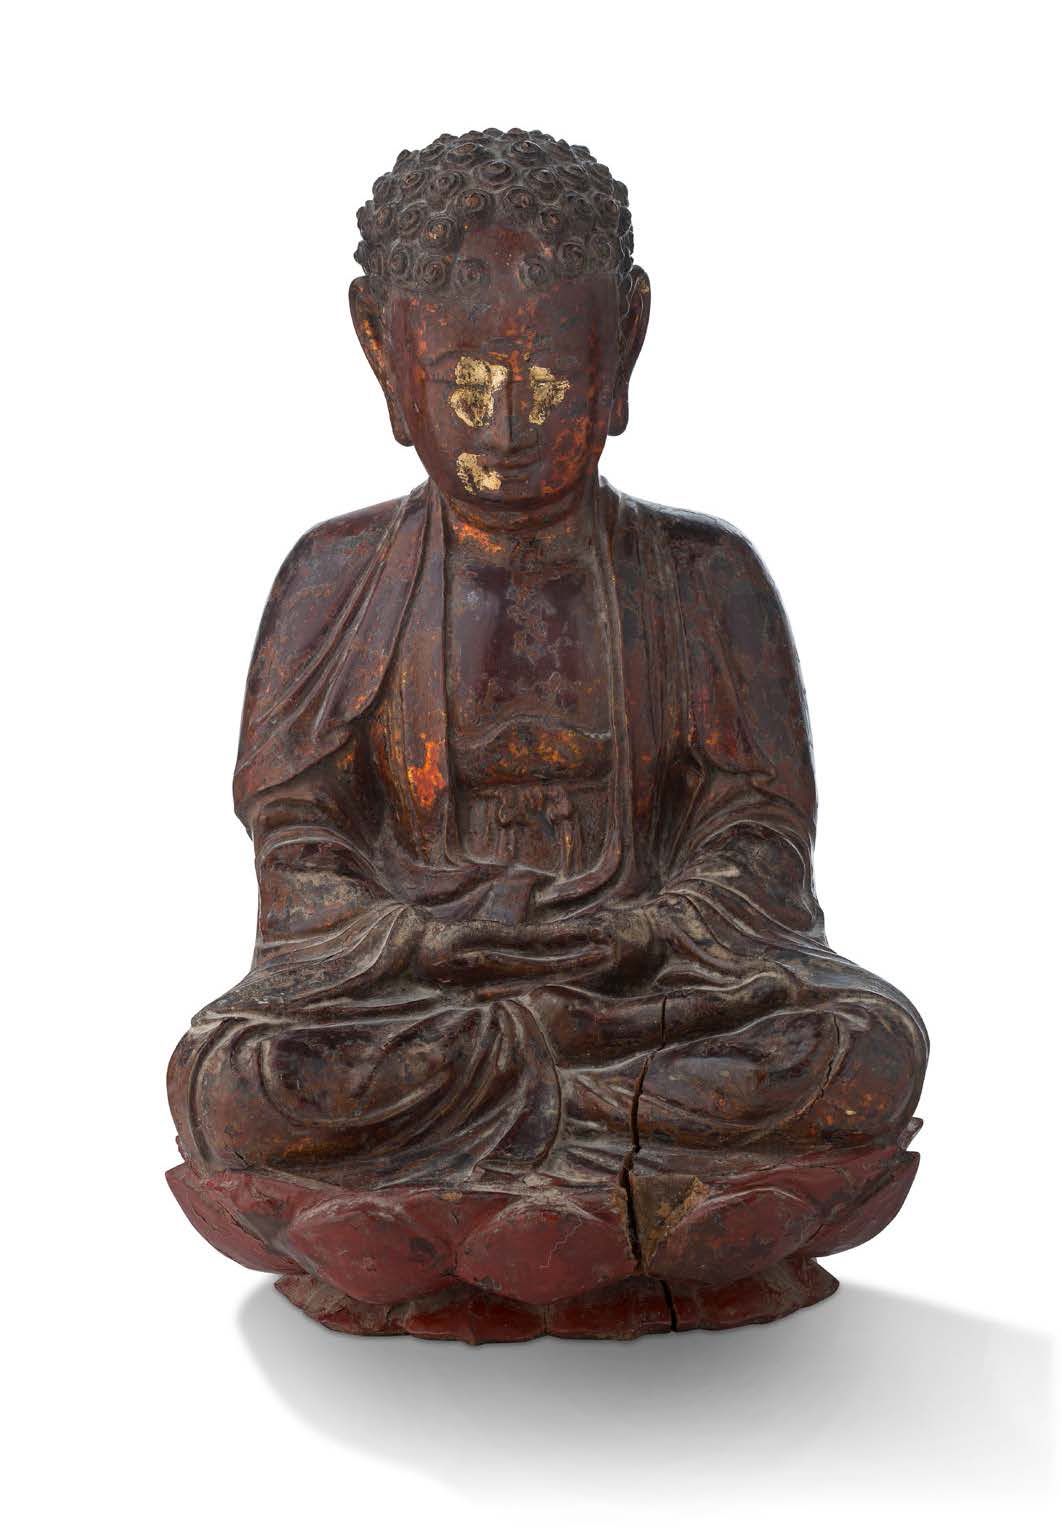 VIETNAM XVIIIe - XIXe SIÈCLE 越南 19世纪
释迦牟尼佛局部镀金漆木雕像